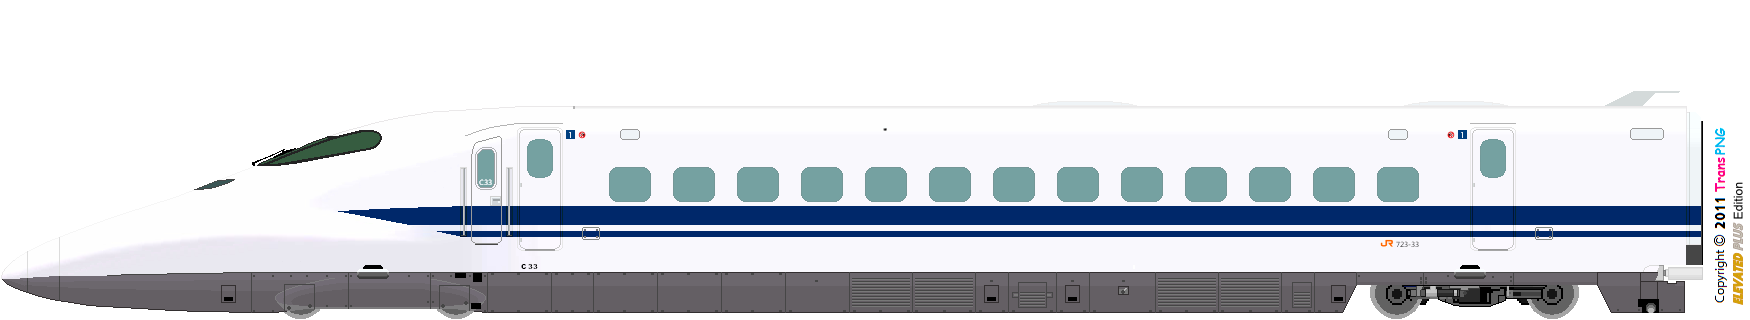 9010 - [9010] Central Japan Railway 52287586168_8b80974f20_o